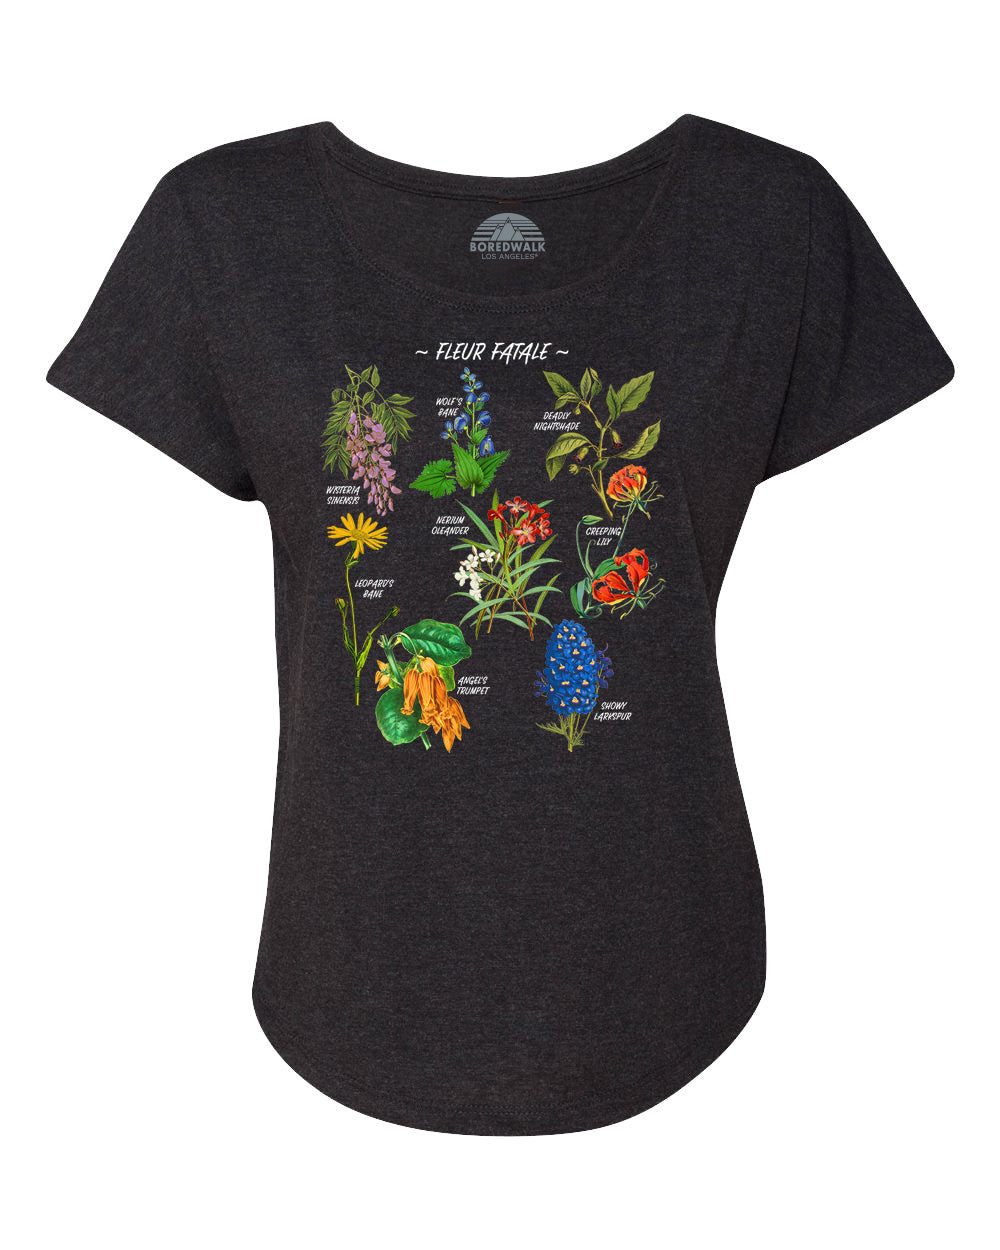 Women's Fleur Fatale Toxic Botanical Chart Scoop Neck T-Shirt